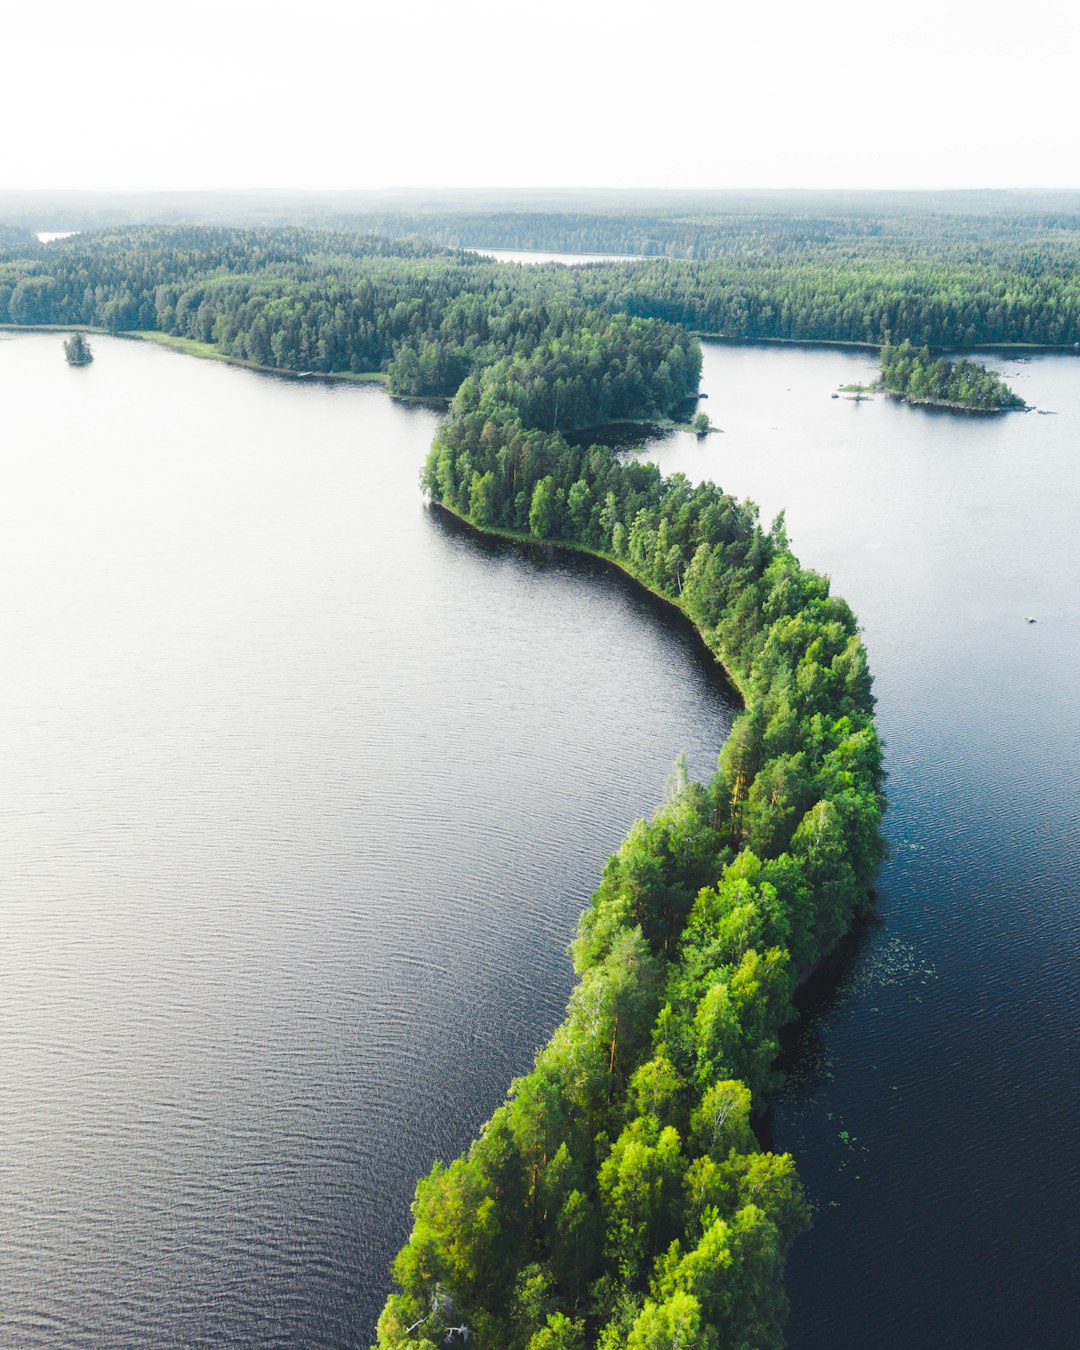 Travel Tips and Stories of Liesjärvi in Finland